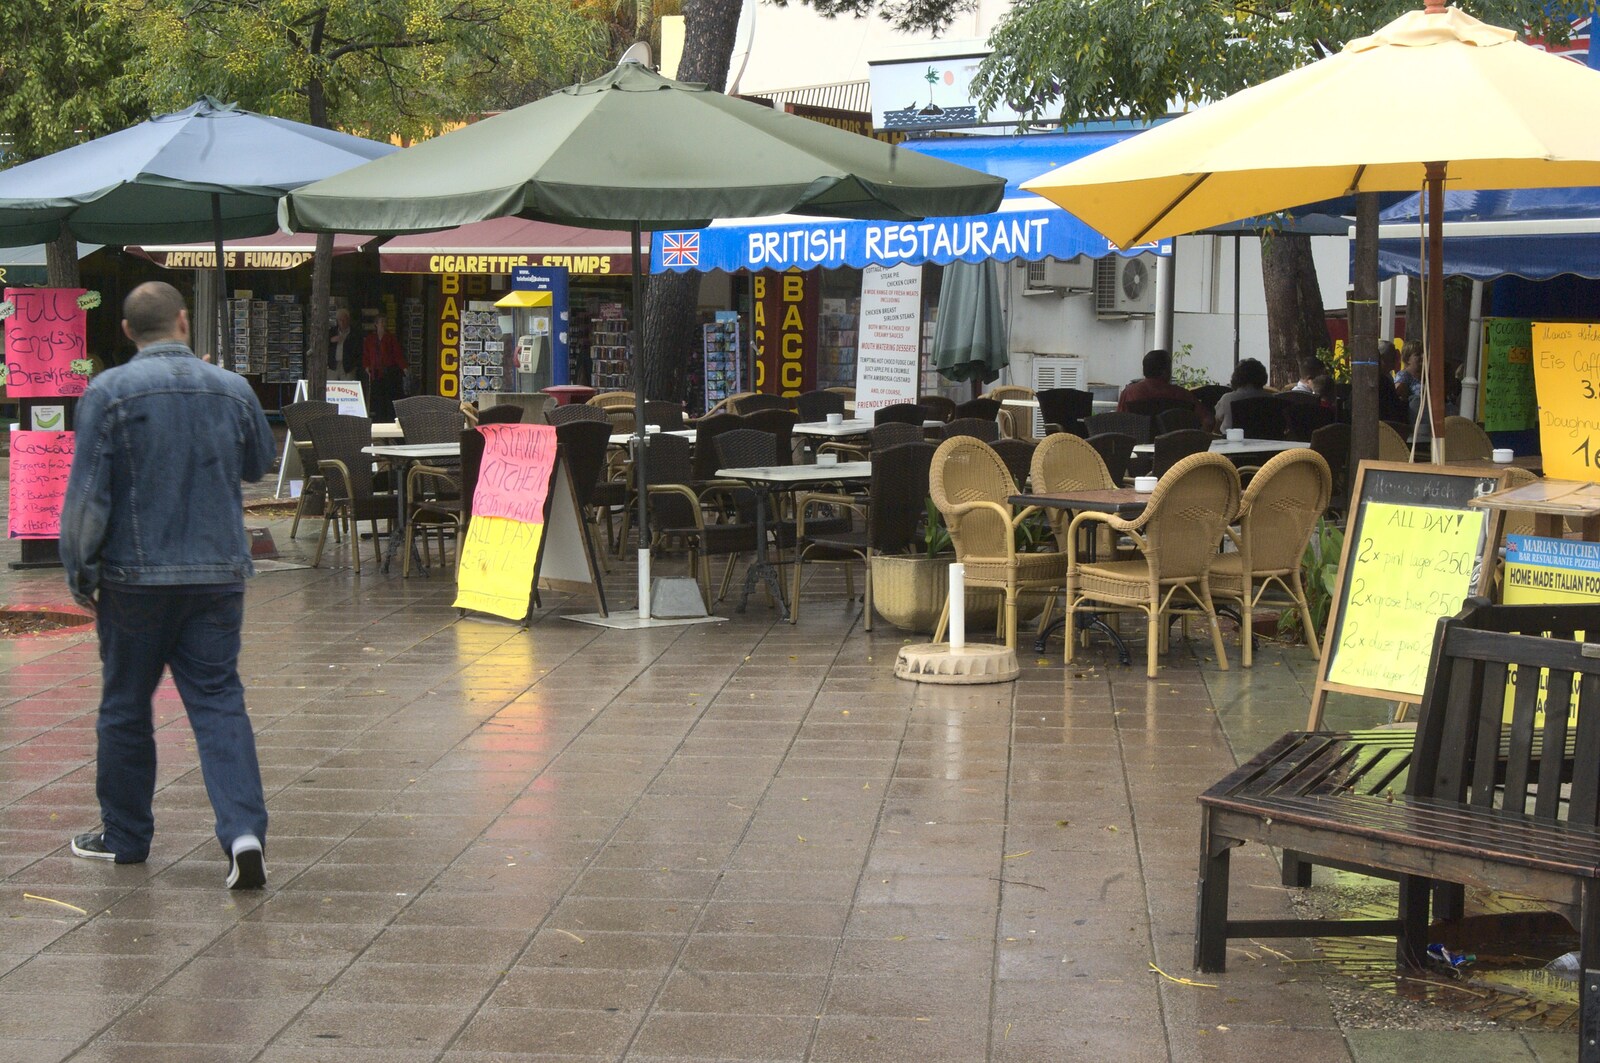 The tragic sight of a 'British Restaurant' from A Postcard From Palmanova, Mallorca, Spain - 21st September 2009